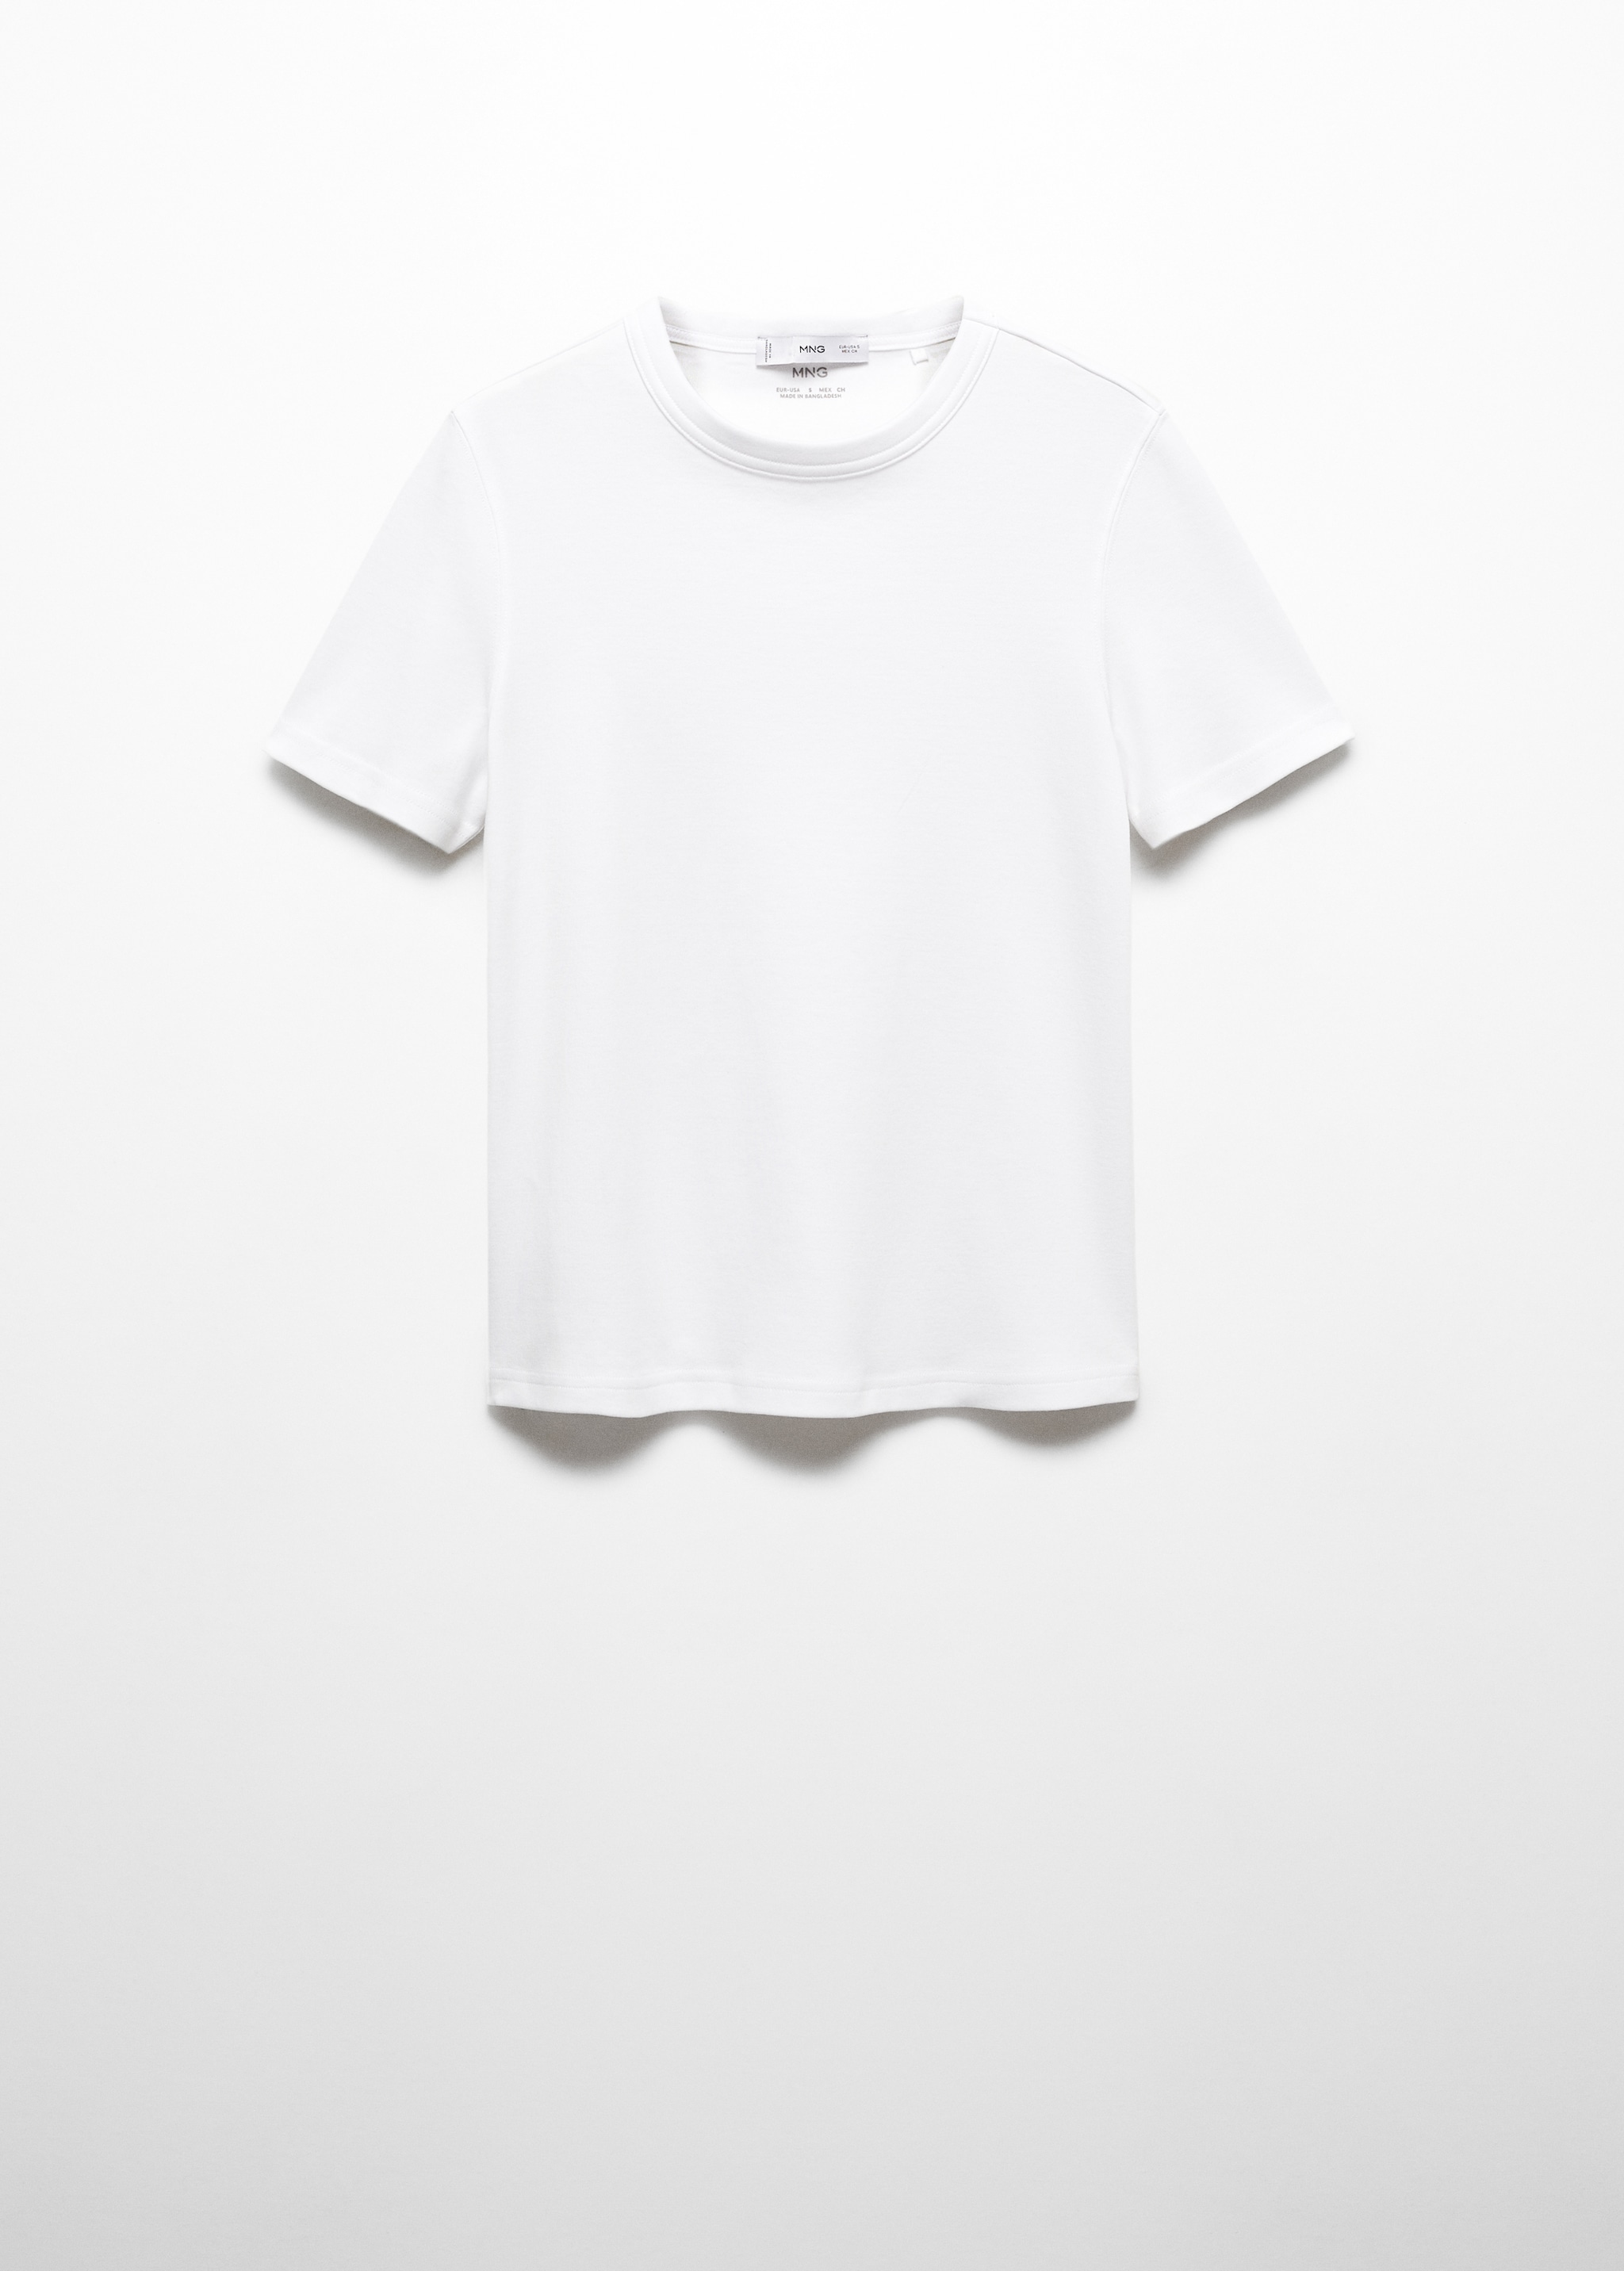 Premium cotton t-shirt - Article without model